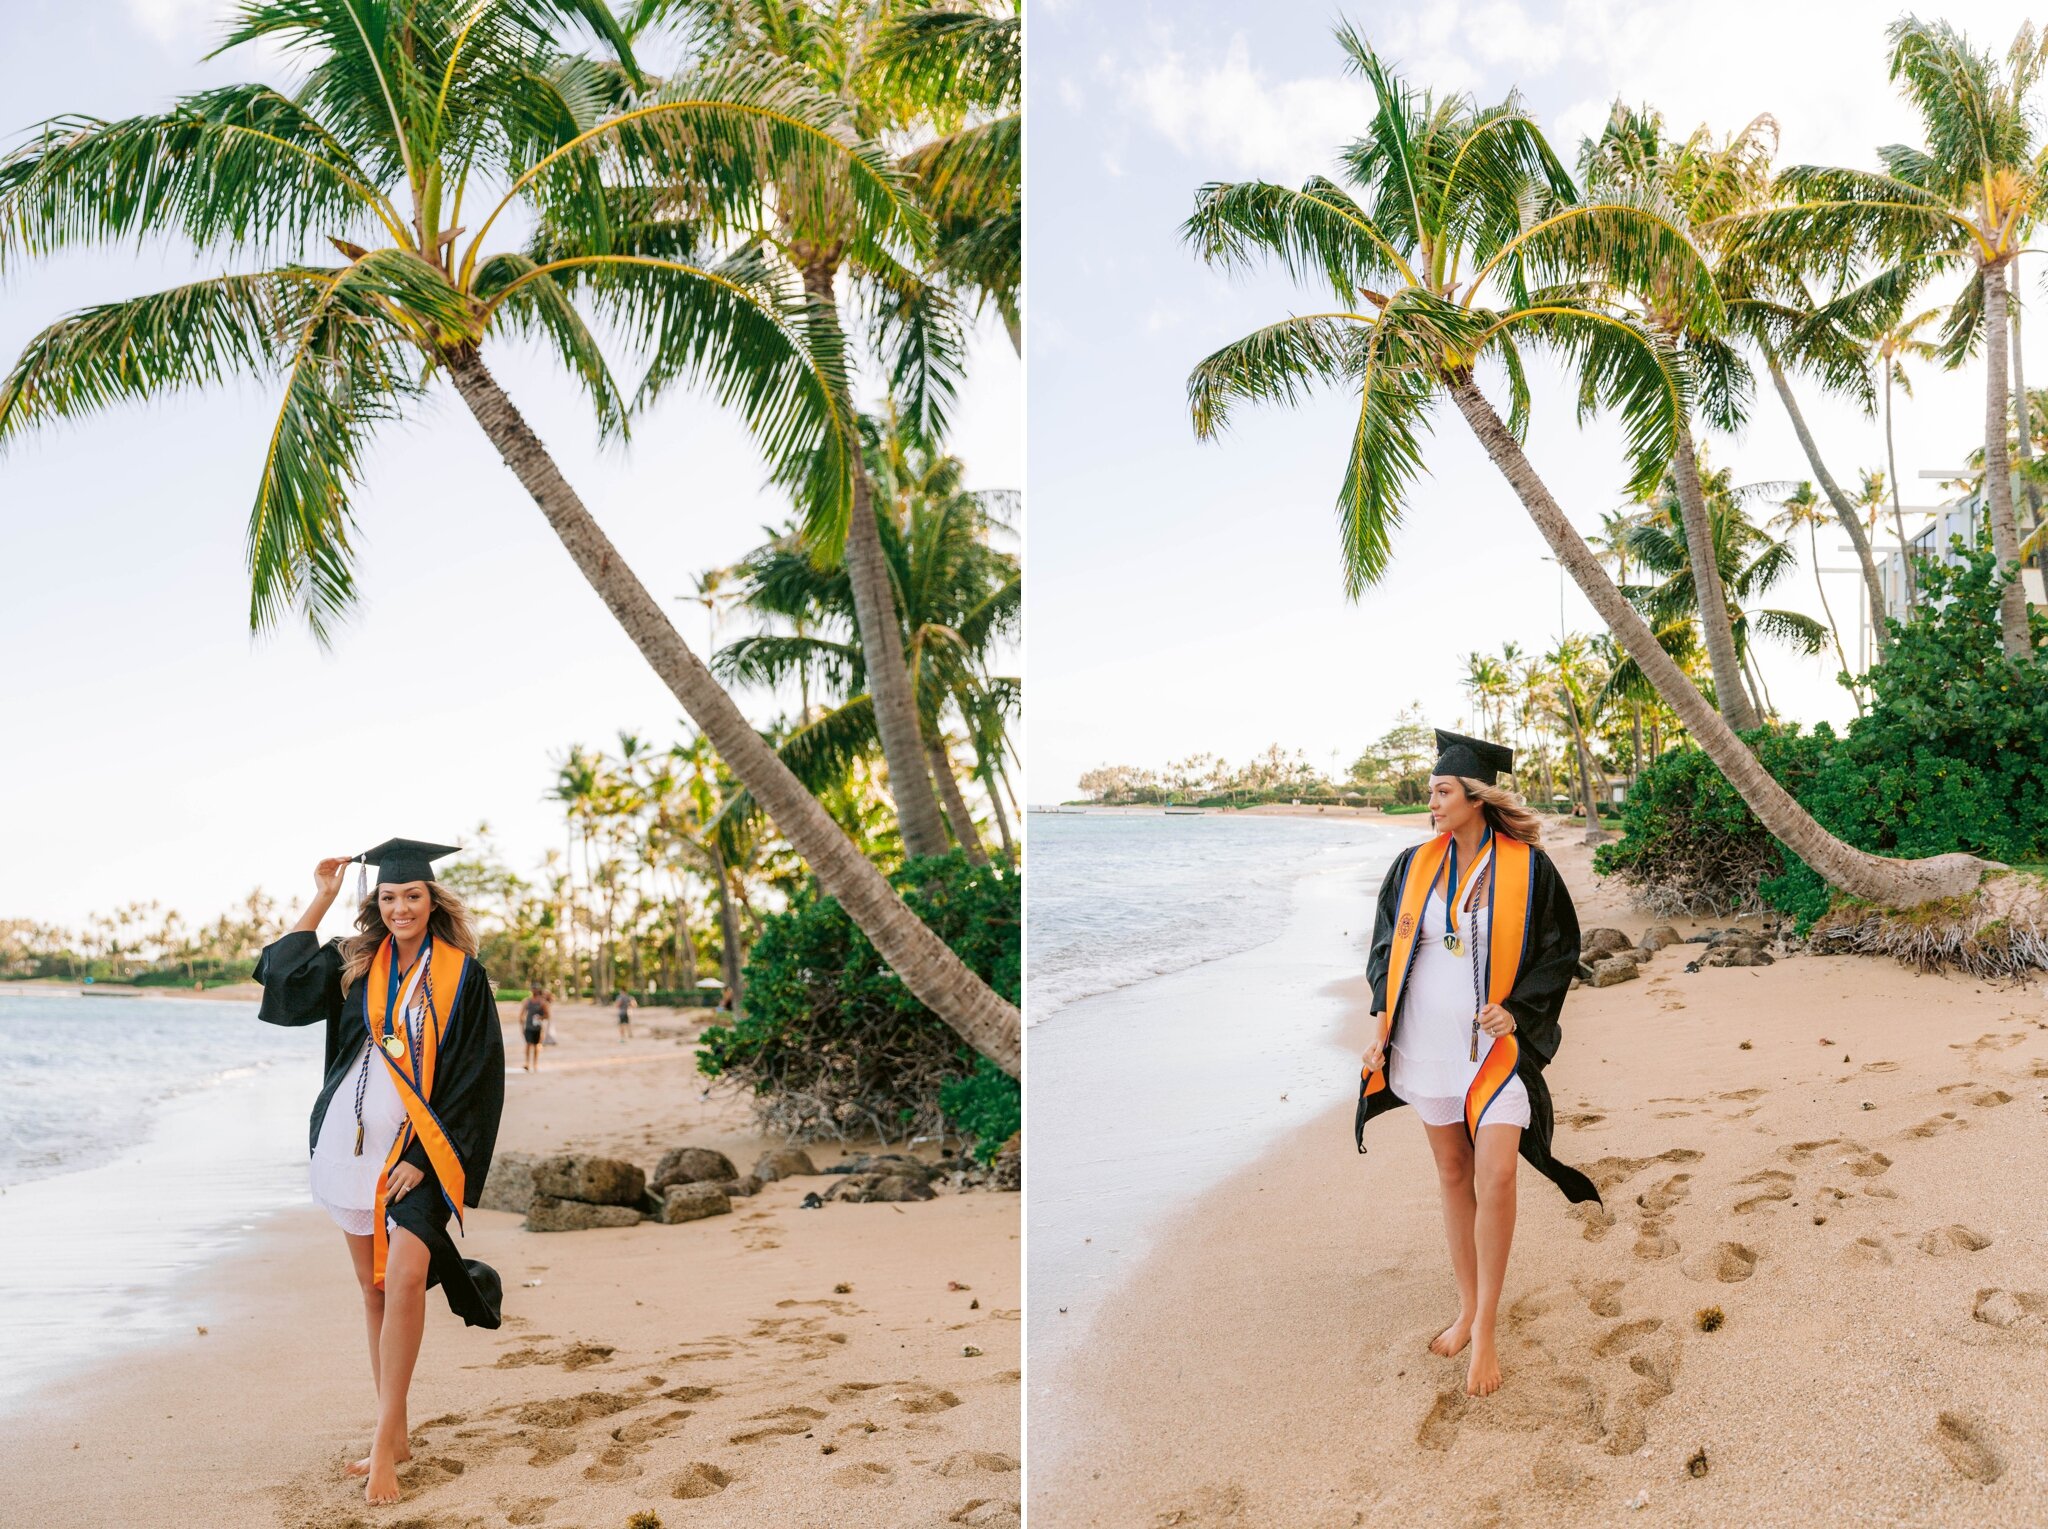 College Senior Photography Session - University Graduation Photographer - Waialae Beach, Oahu, Hawaii